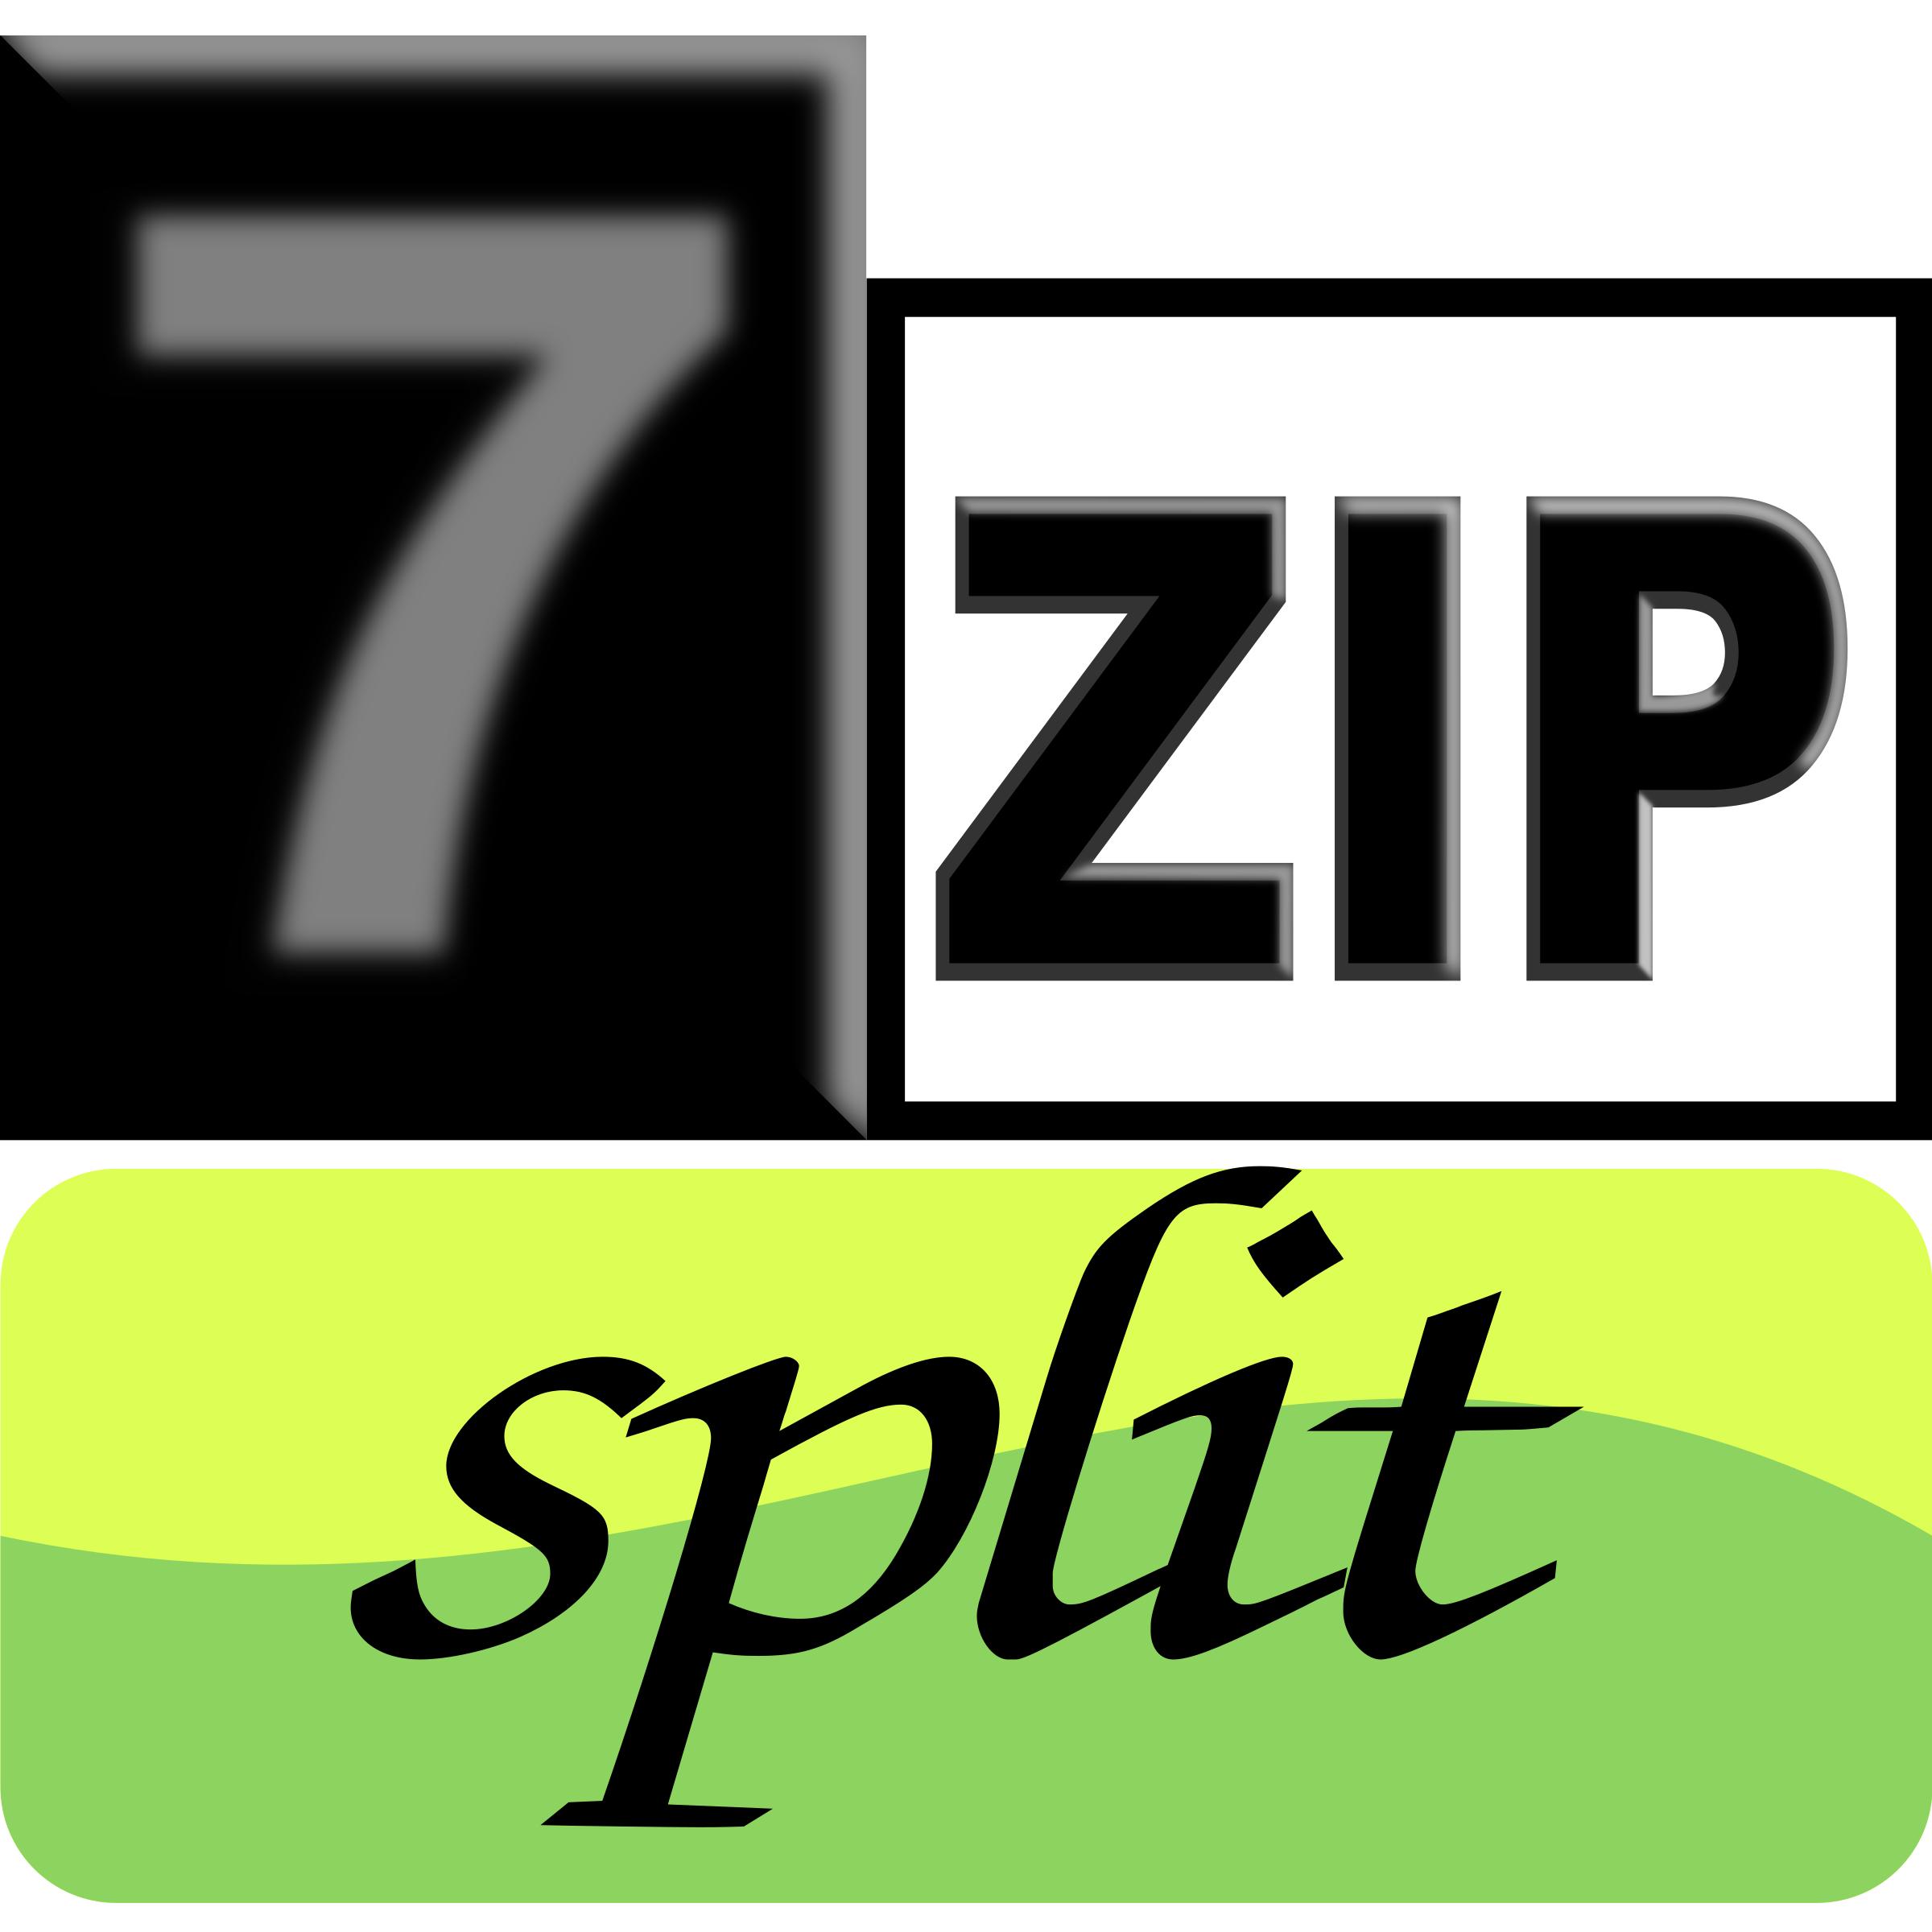 7zipClassic-split PNG icons